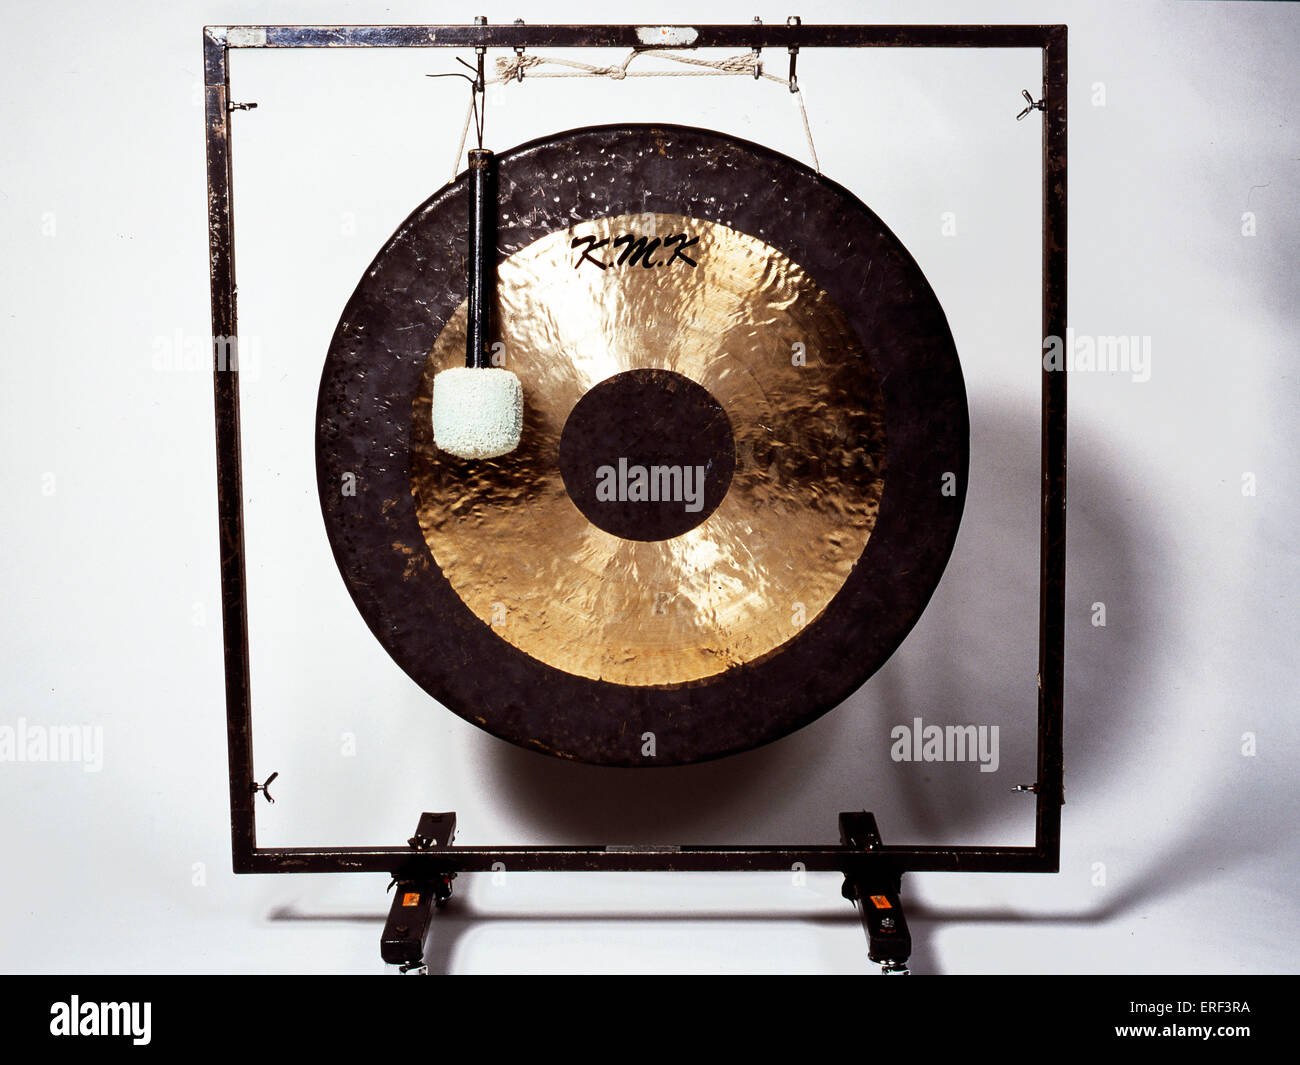 Tam-tam (o tamtam) - strumento a percussione, simile a gong. Foto Stock